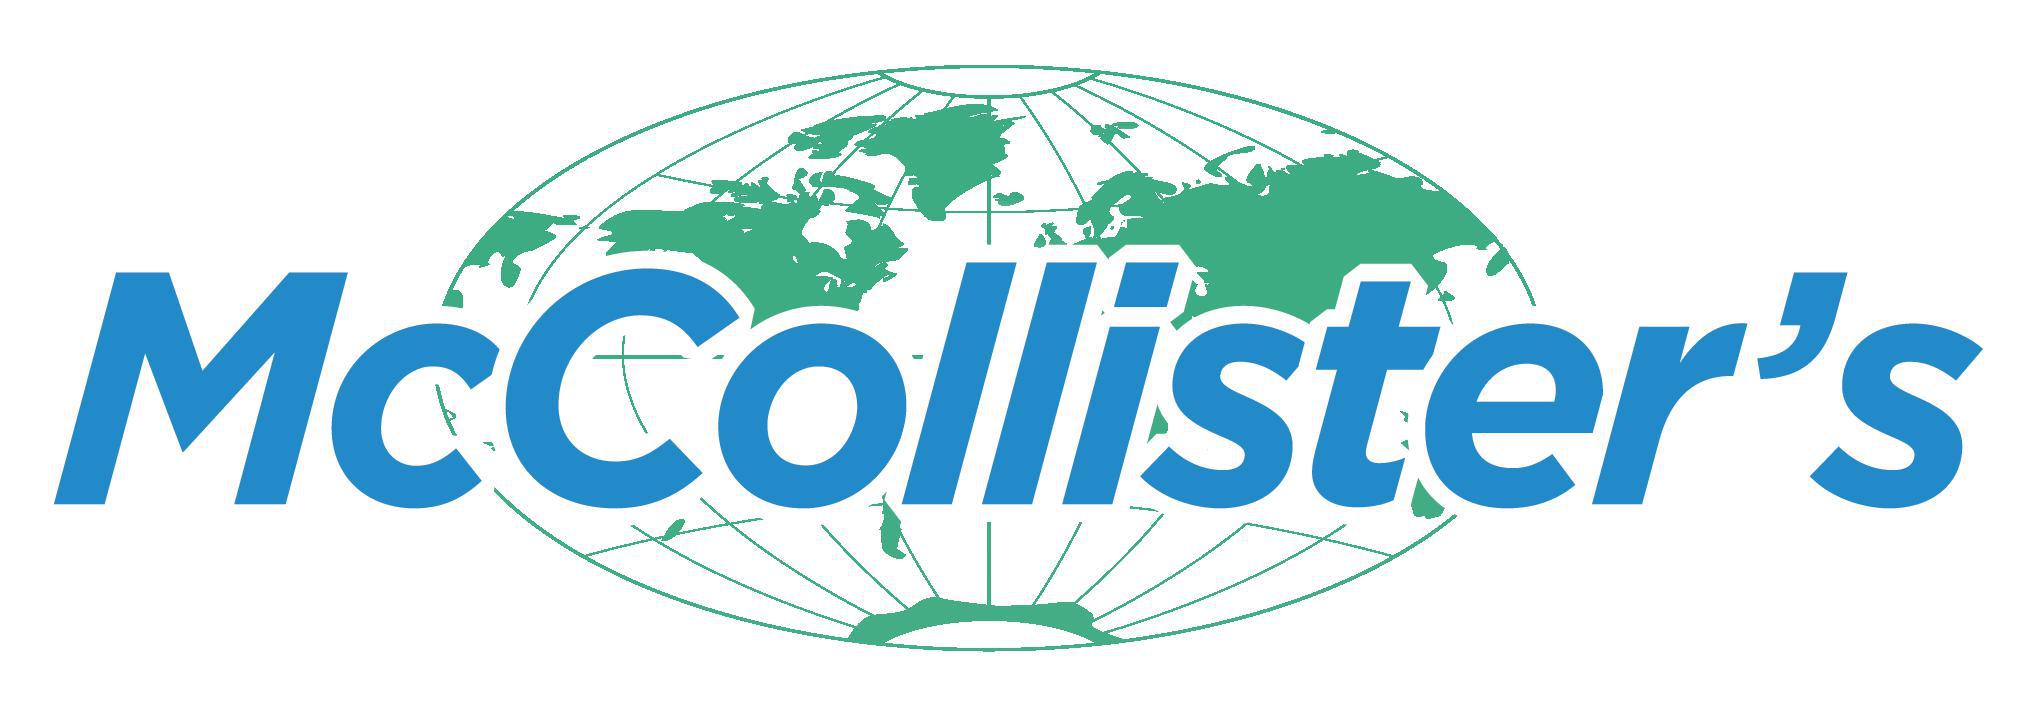 Mccollister's Transportation Group logo 1